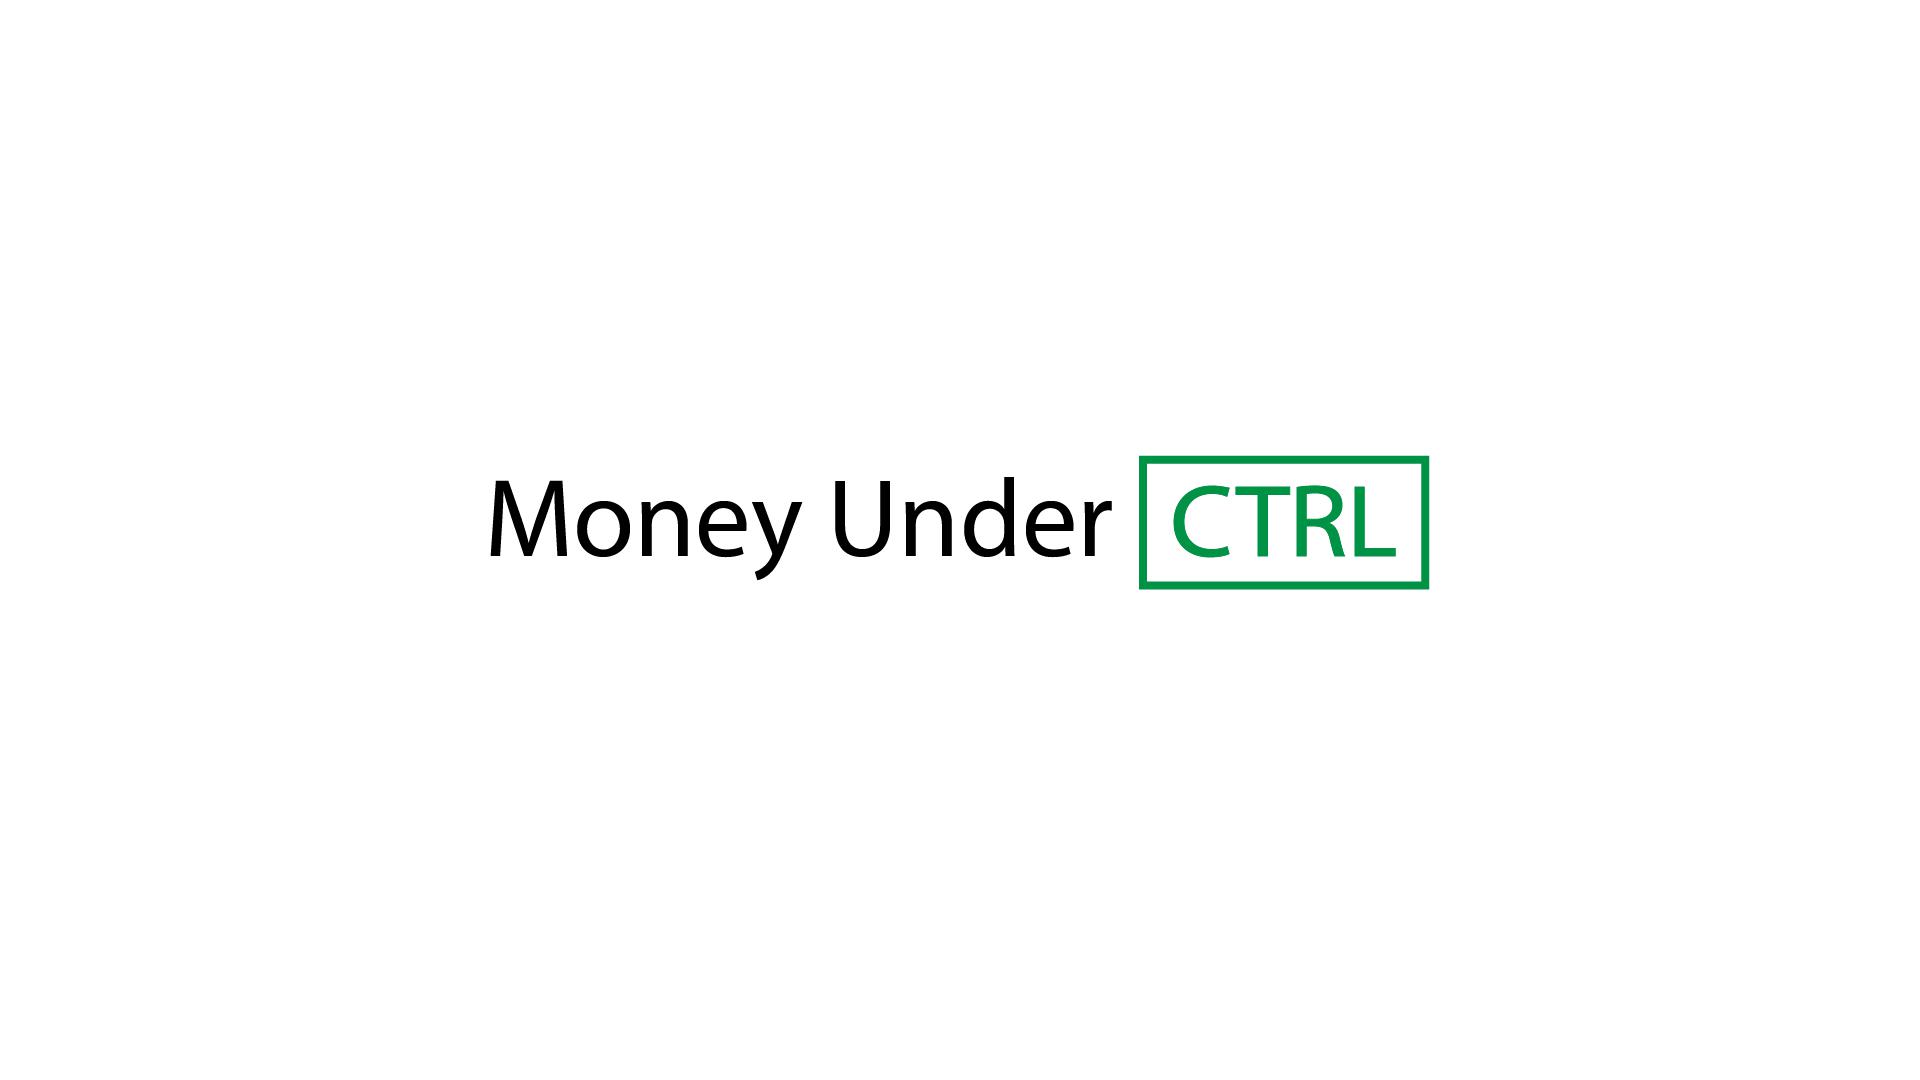 Money Under CTRL Logo